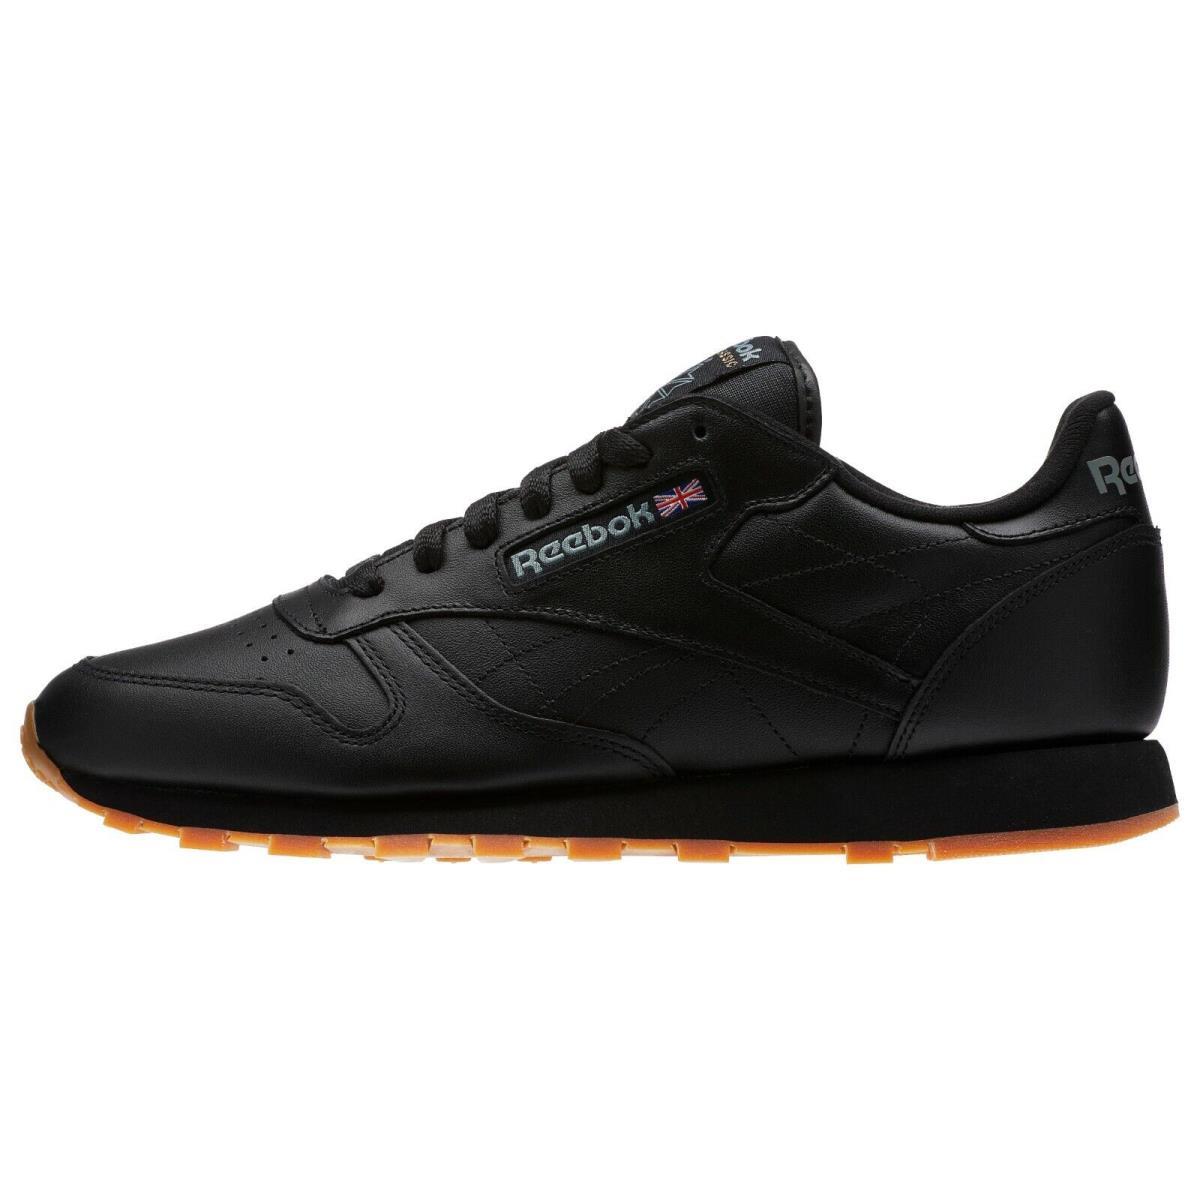 Reebok Men Classic Leather Running Shoe Black / Gum 49798